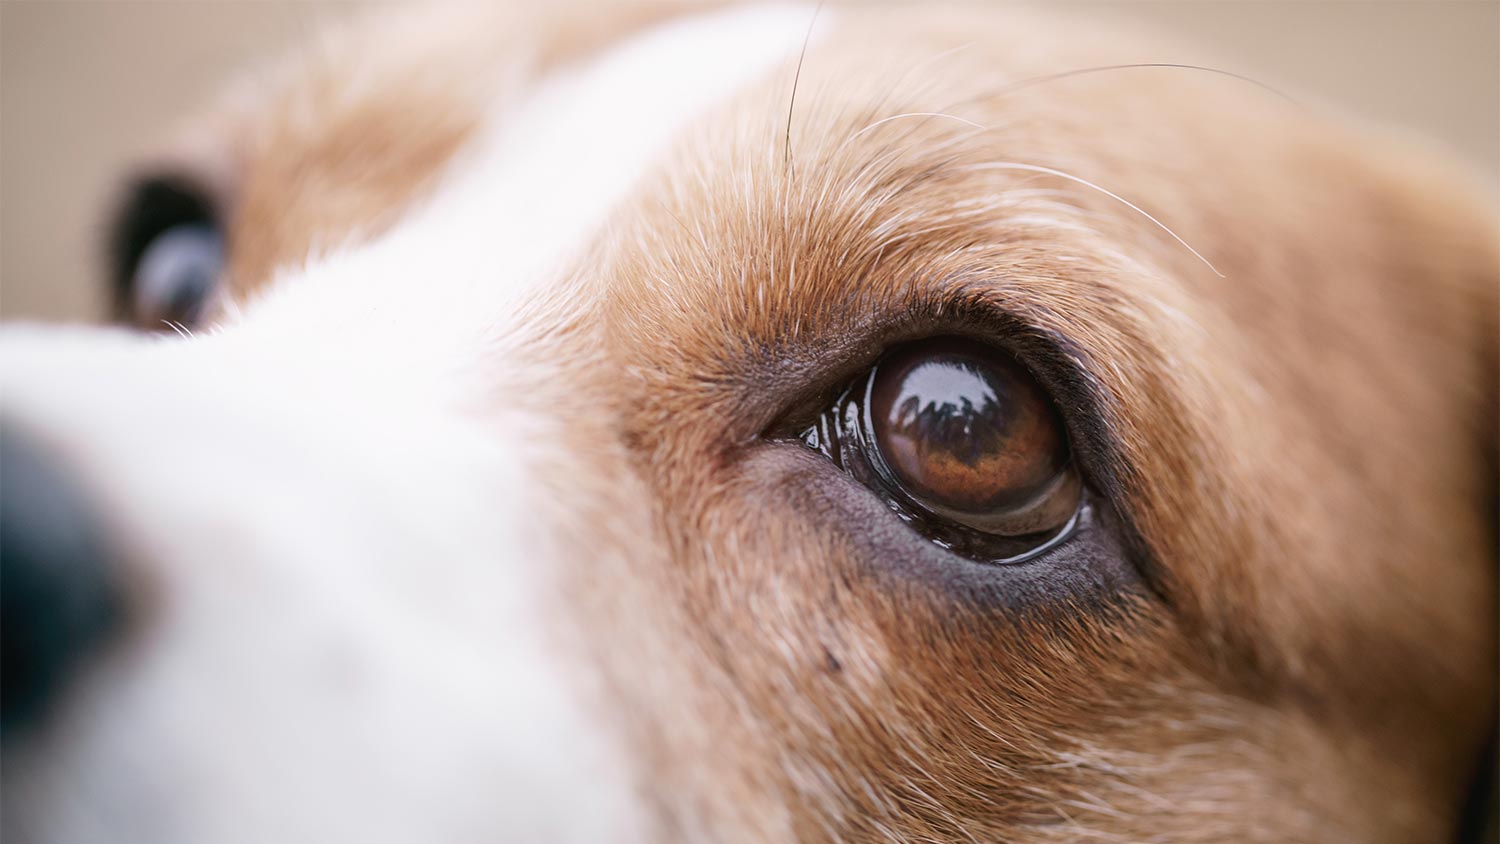 antibiotics for dog eye infection